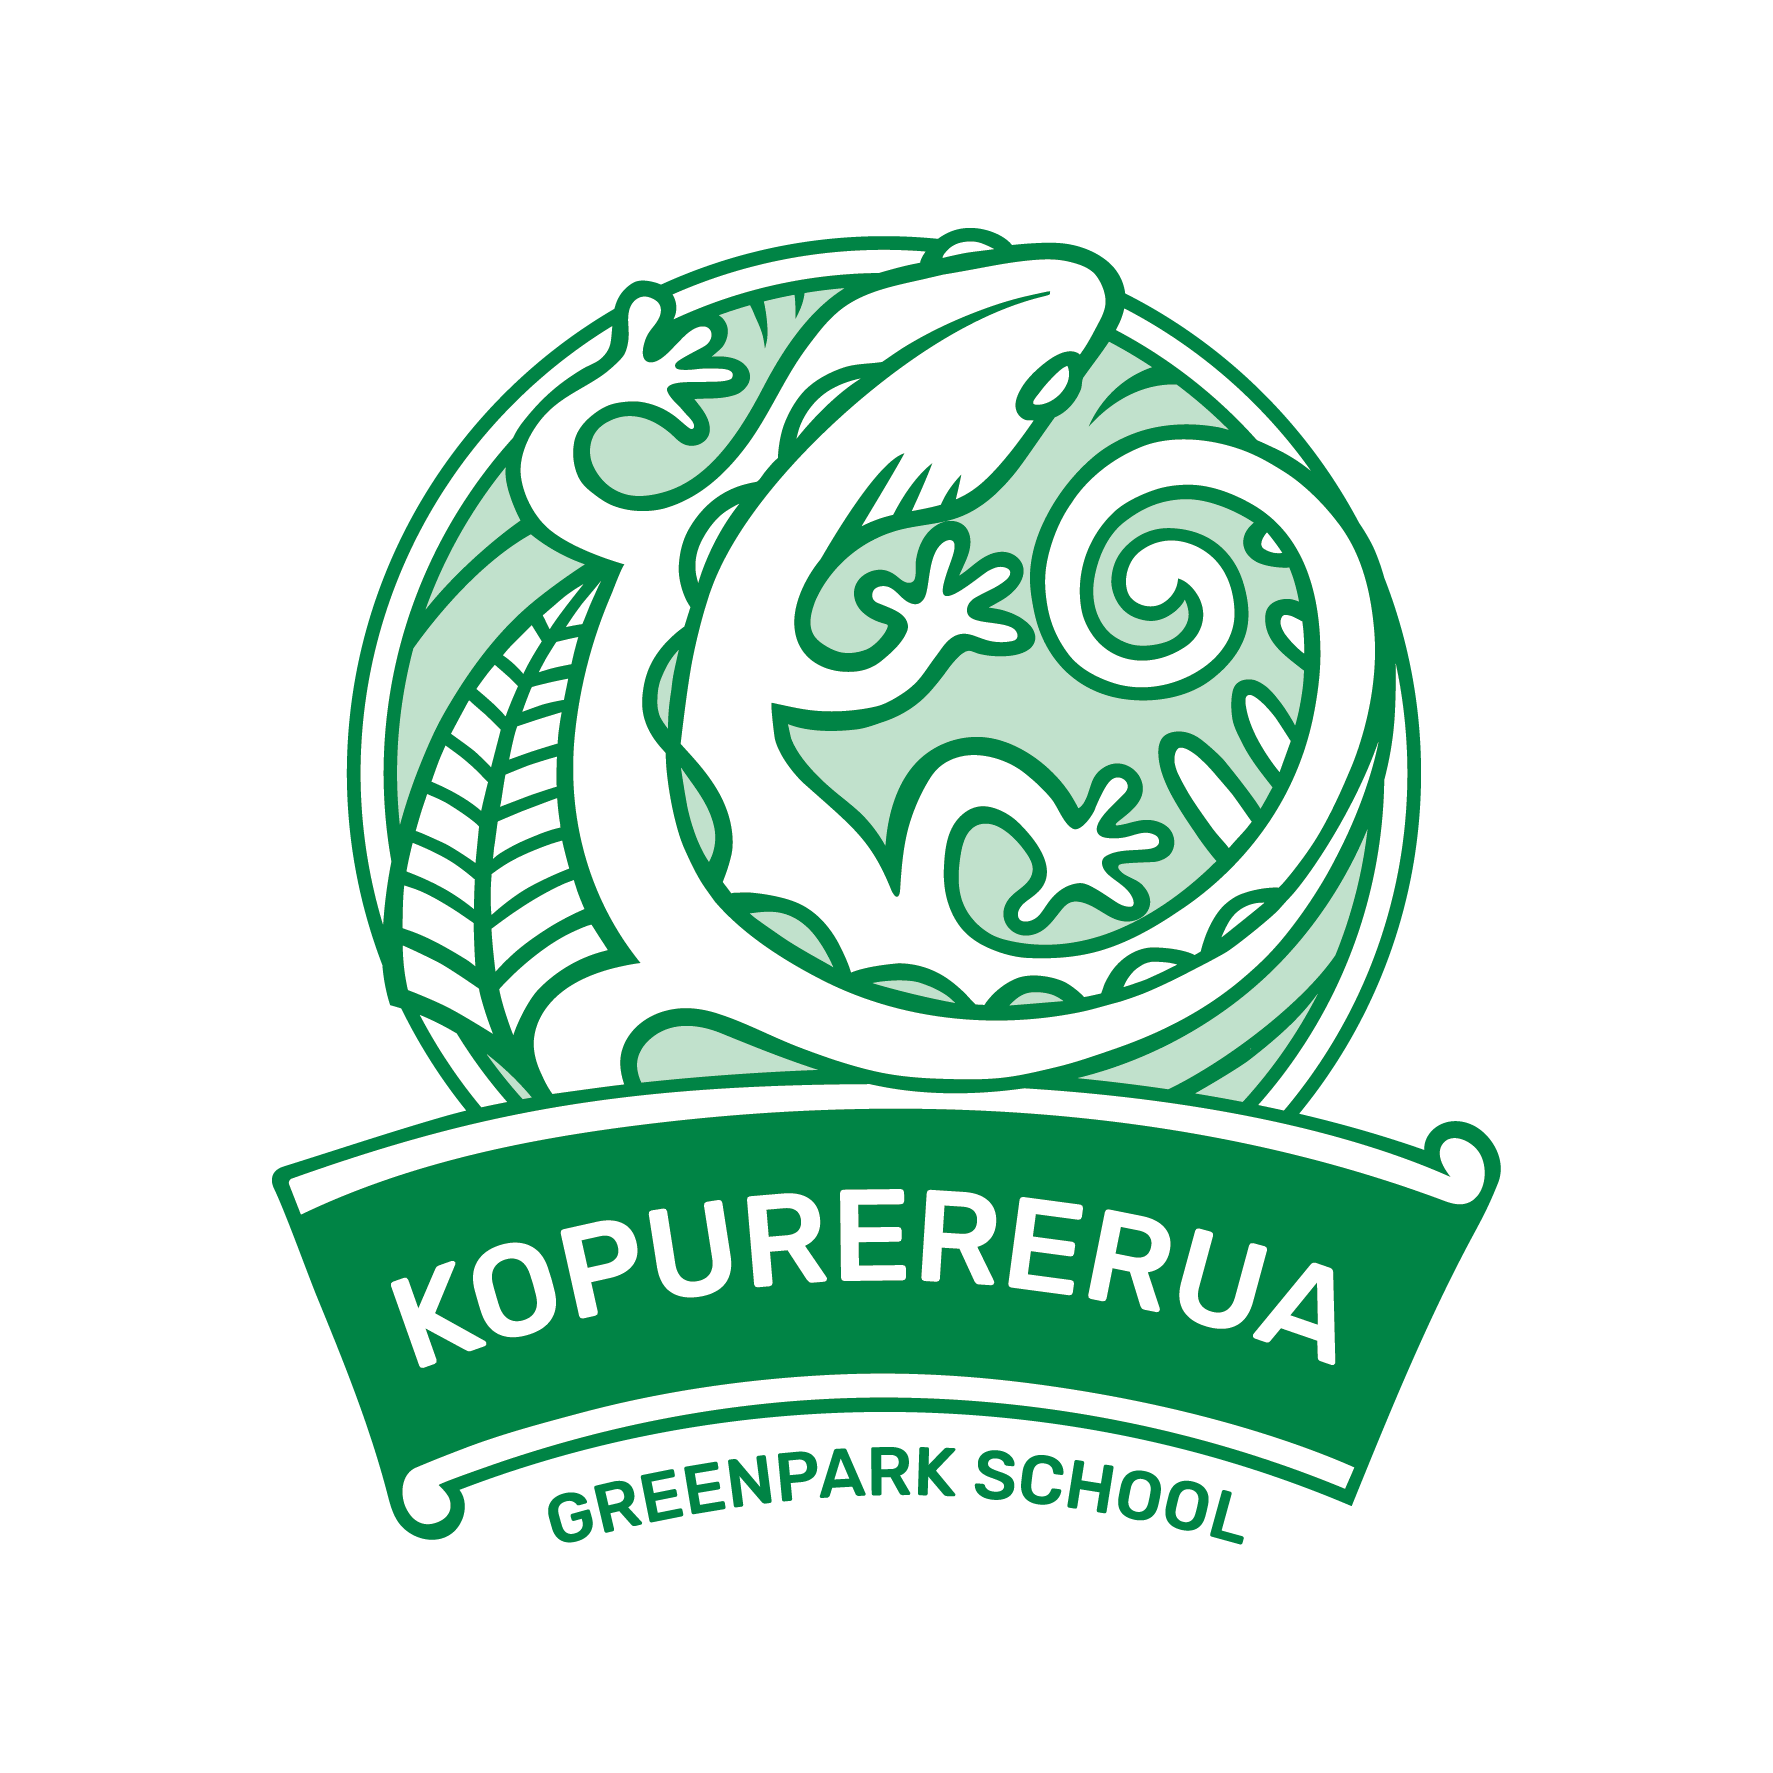 Greenpark School House logo_Kopurererua.png